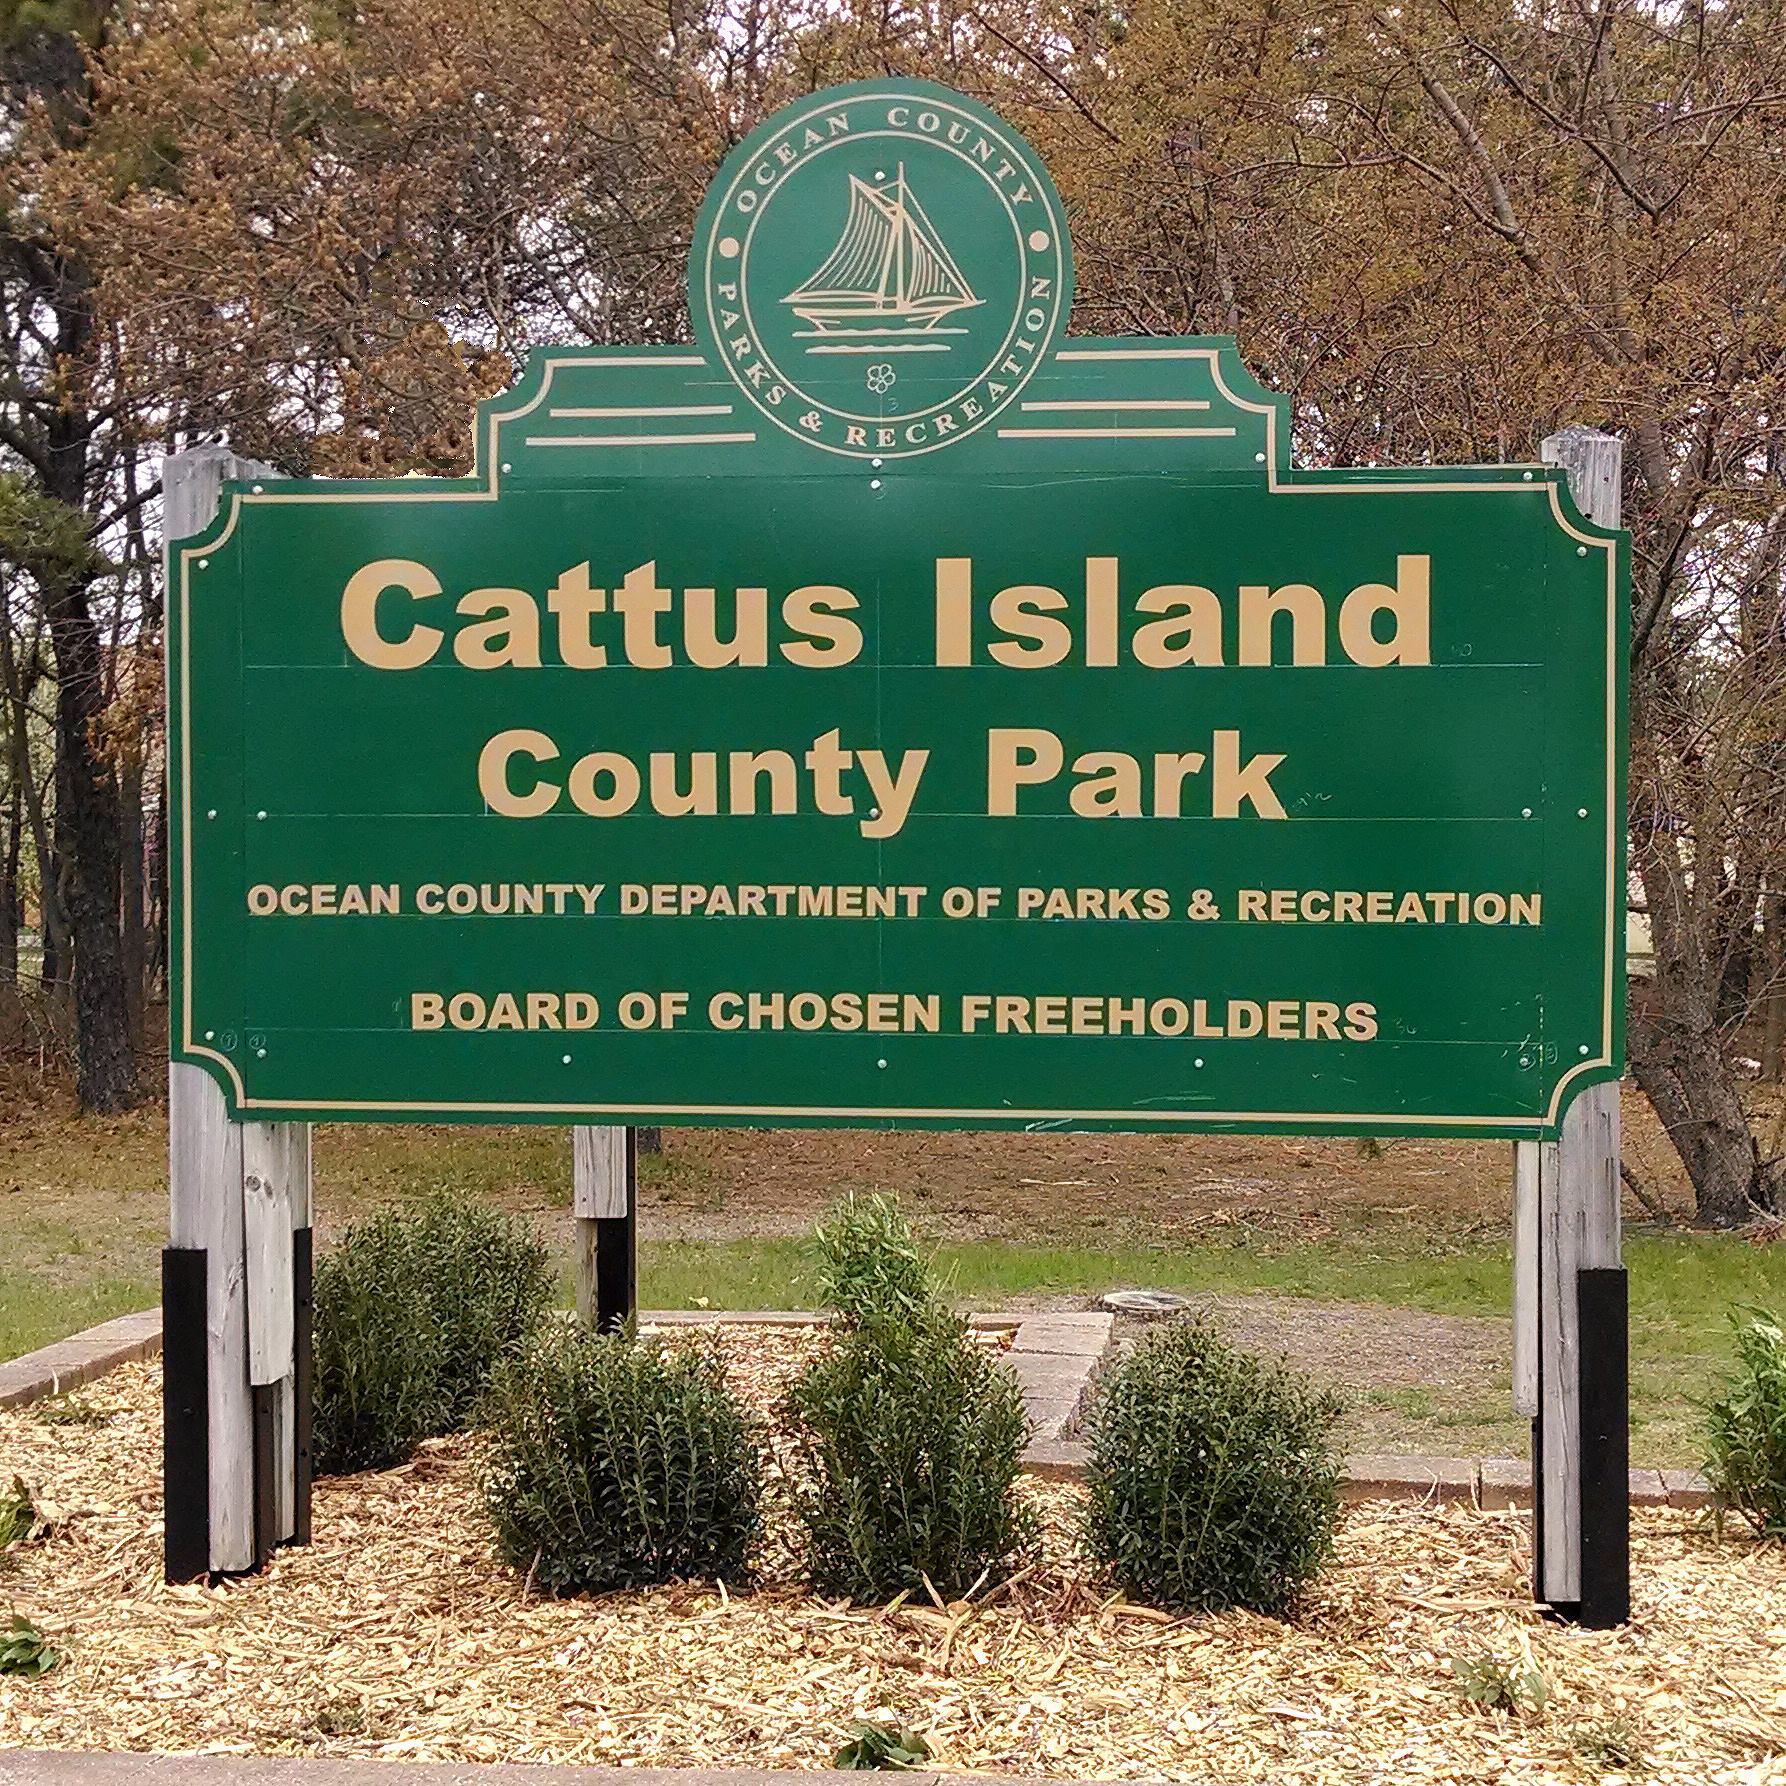 Cattus Island County Park